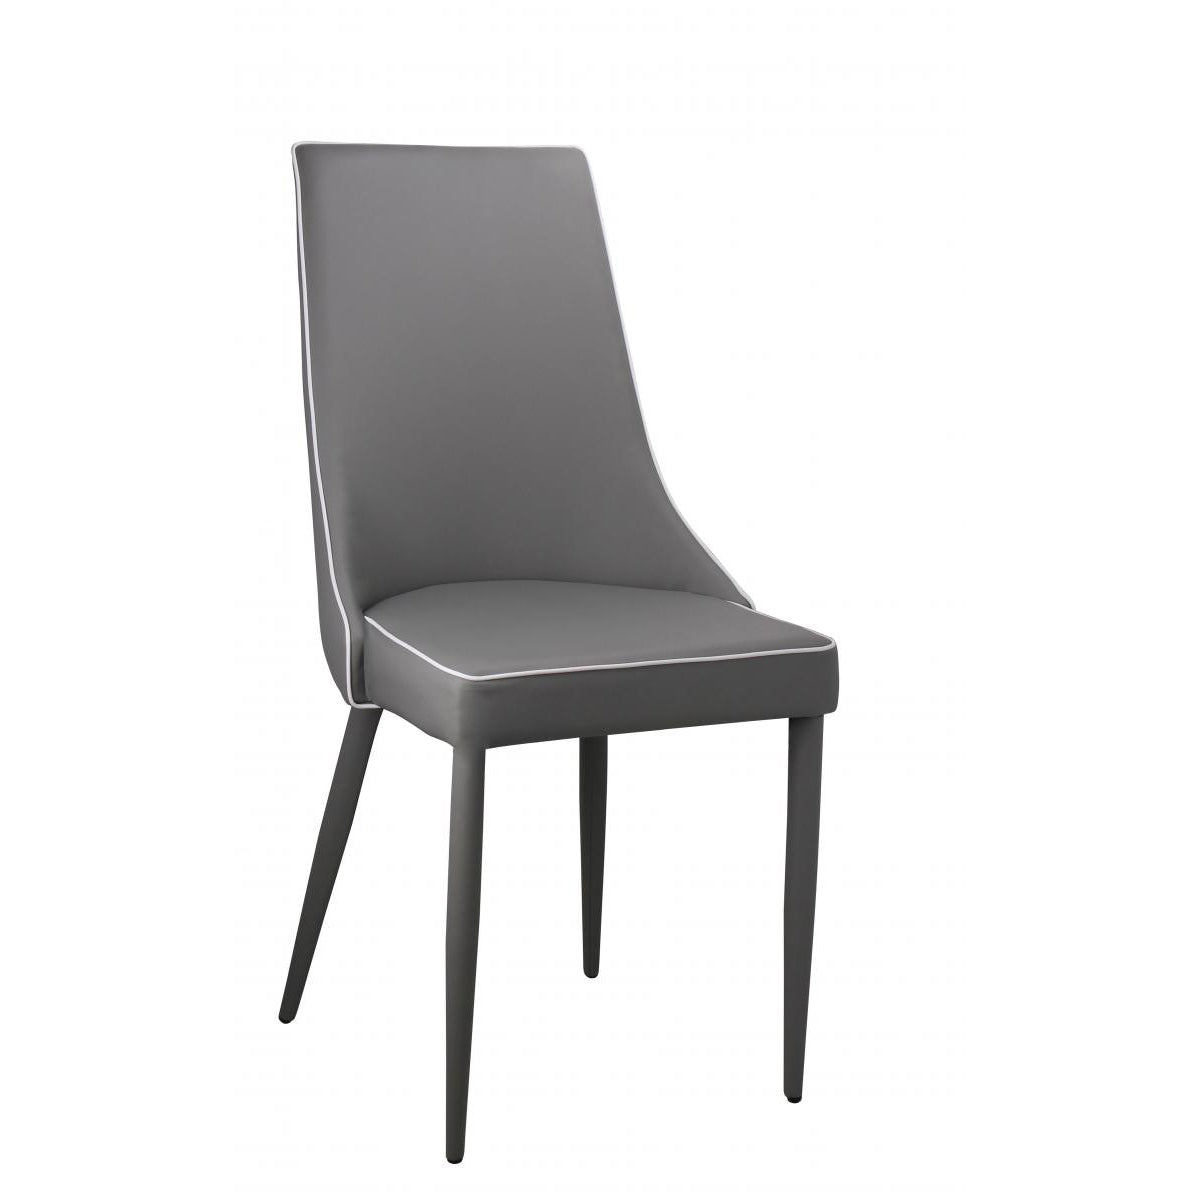 Daisy PU Dining Chair Grey With Grey Metal Legs